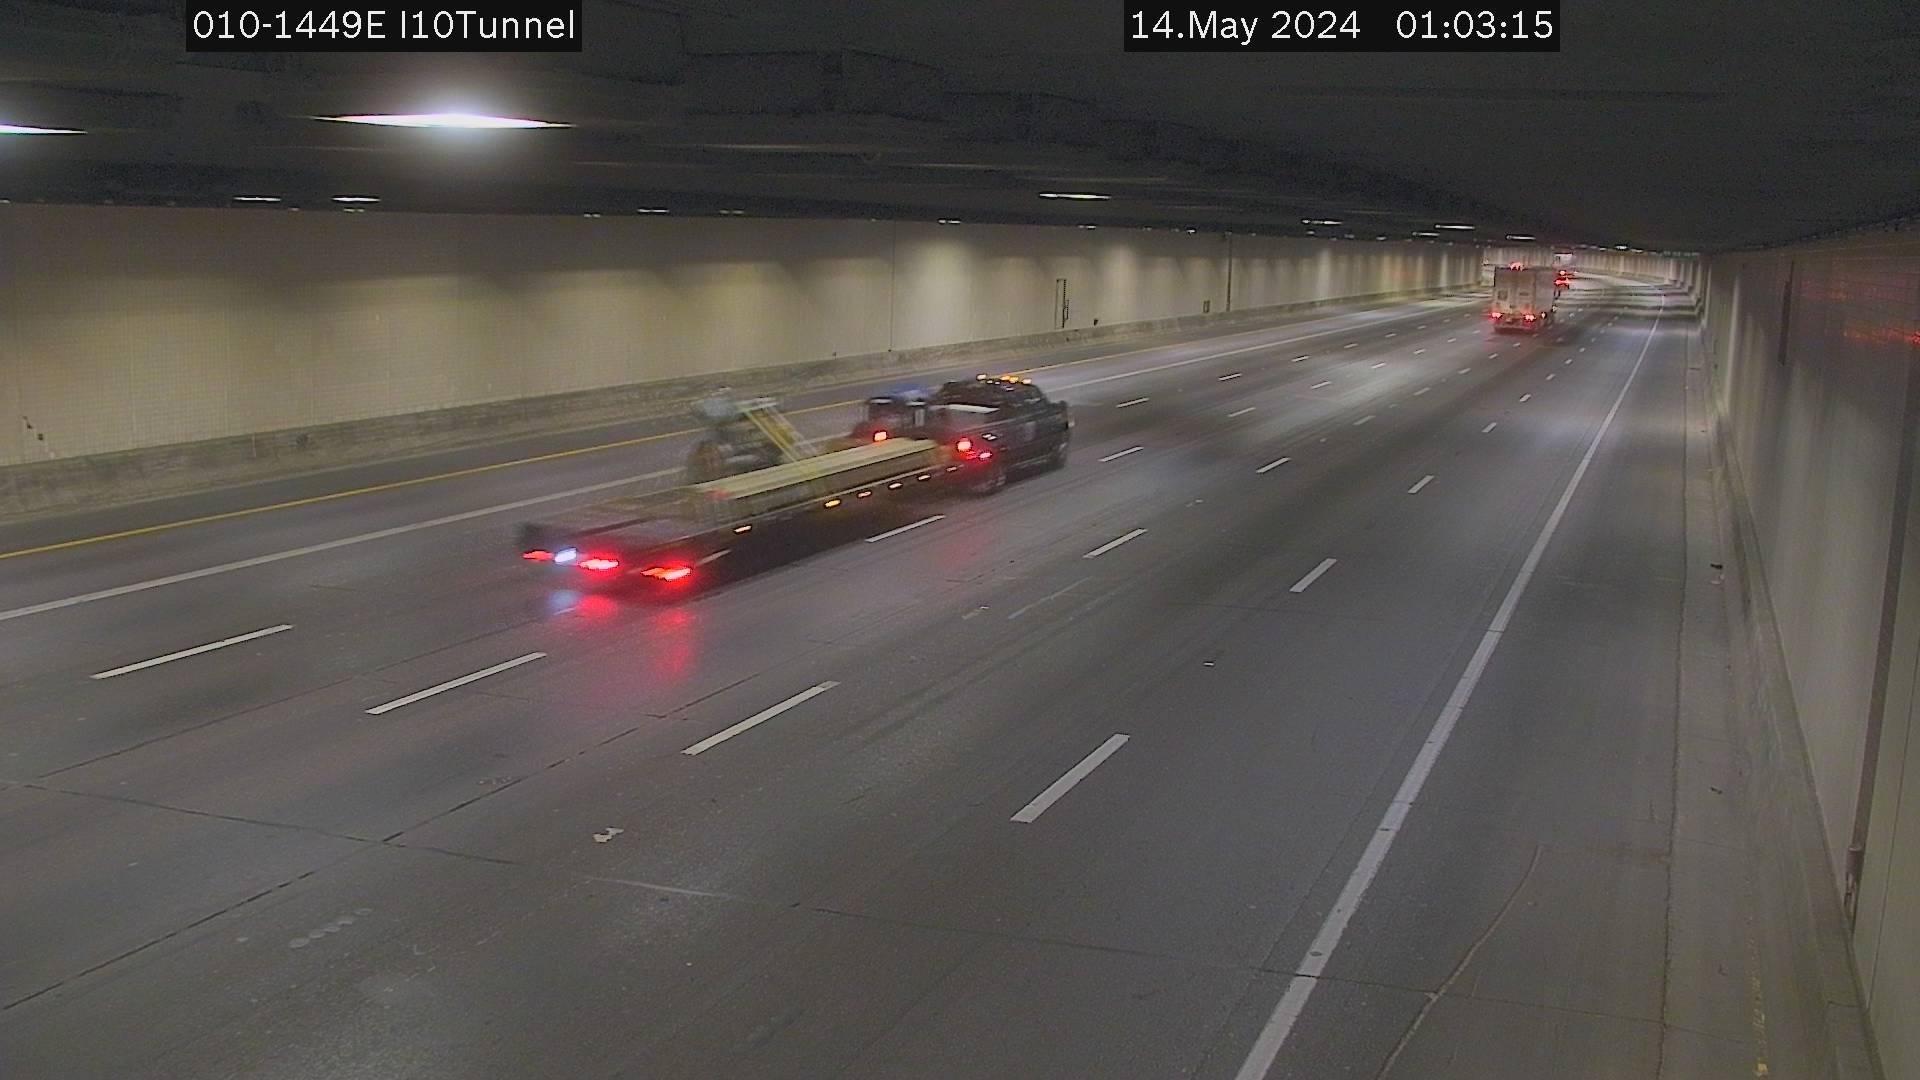 Traffic Cam Phoenix › East: I-10 EB 144.95 @Tunnel Player